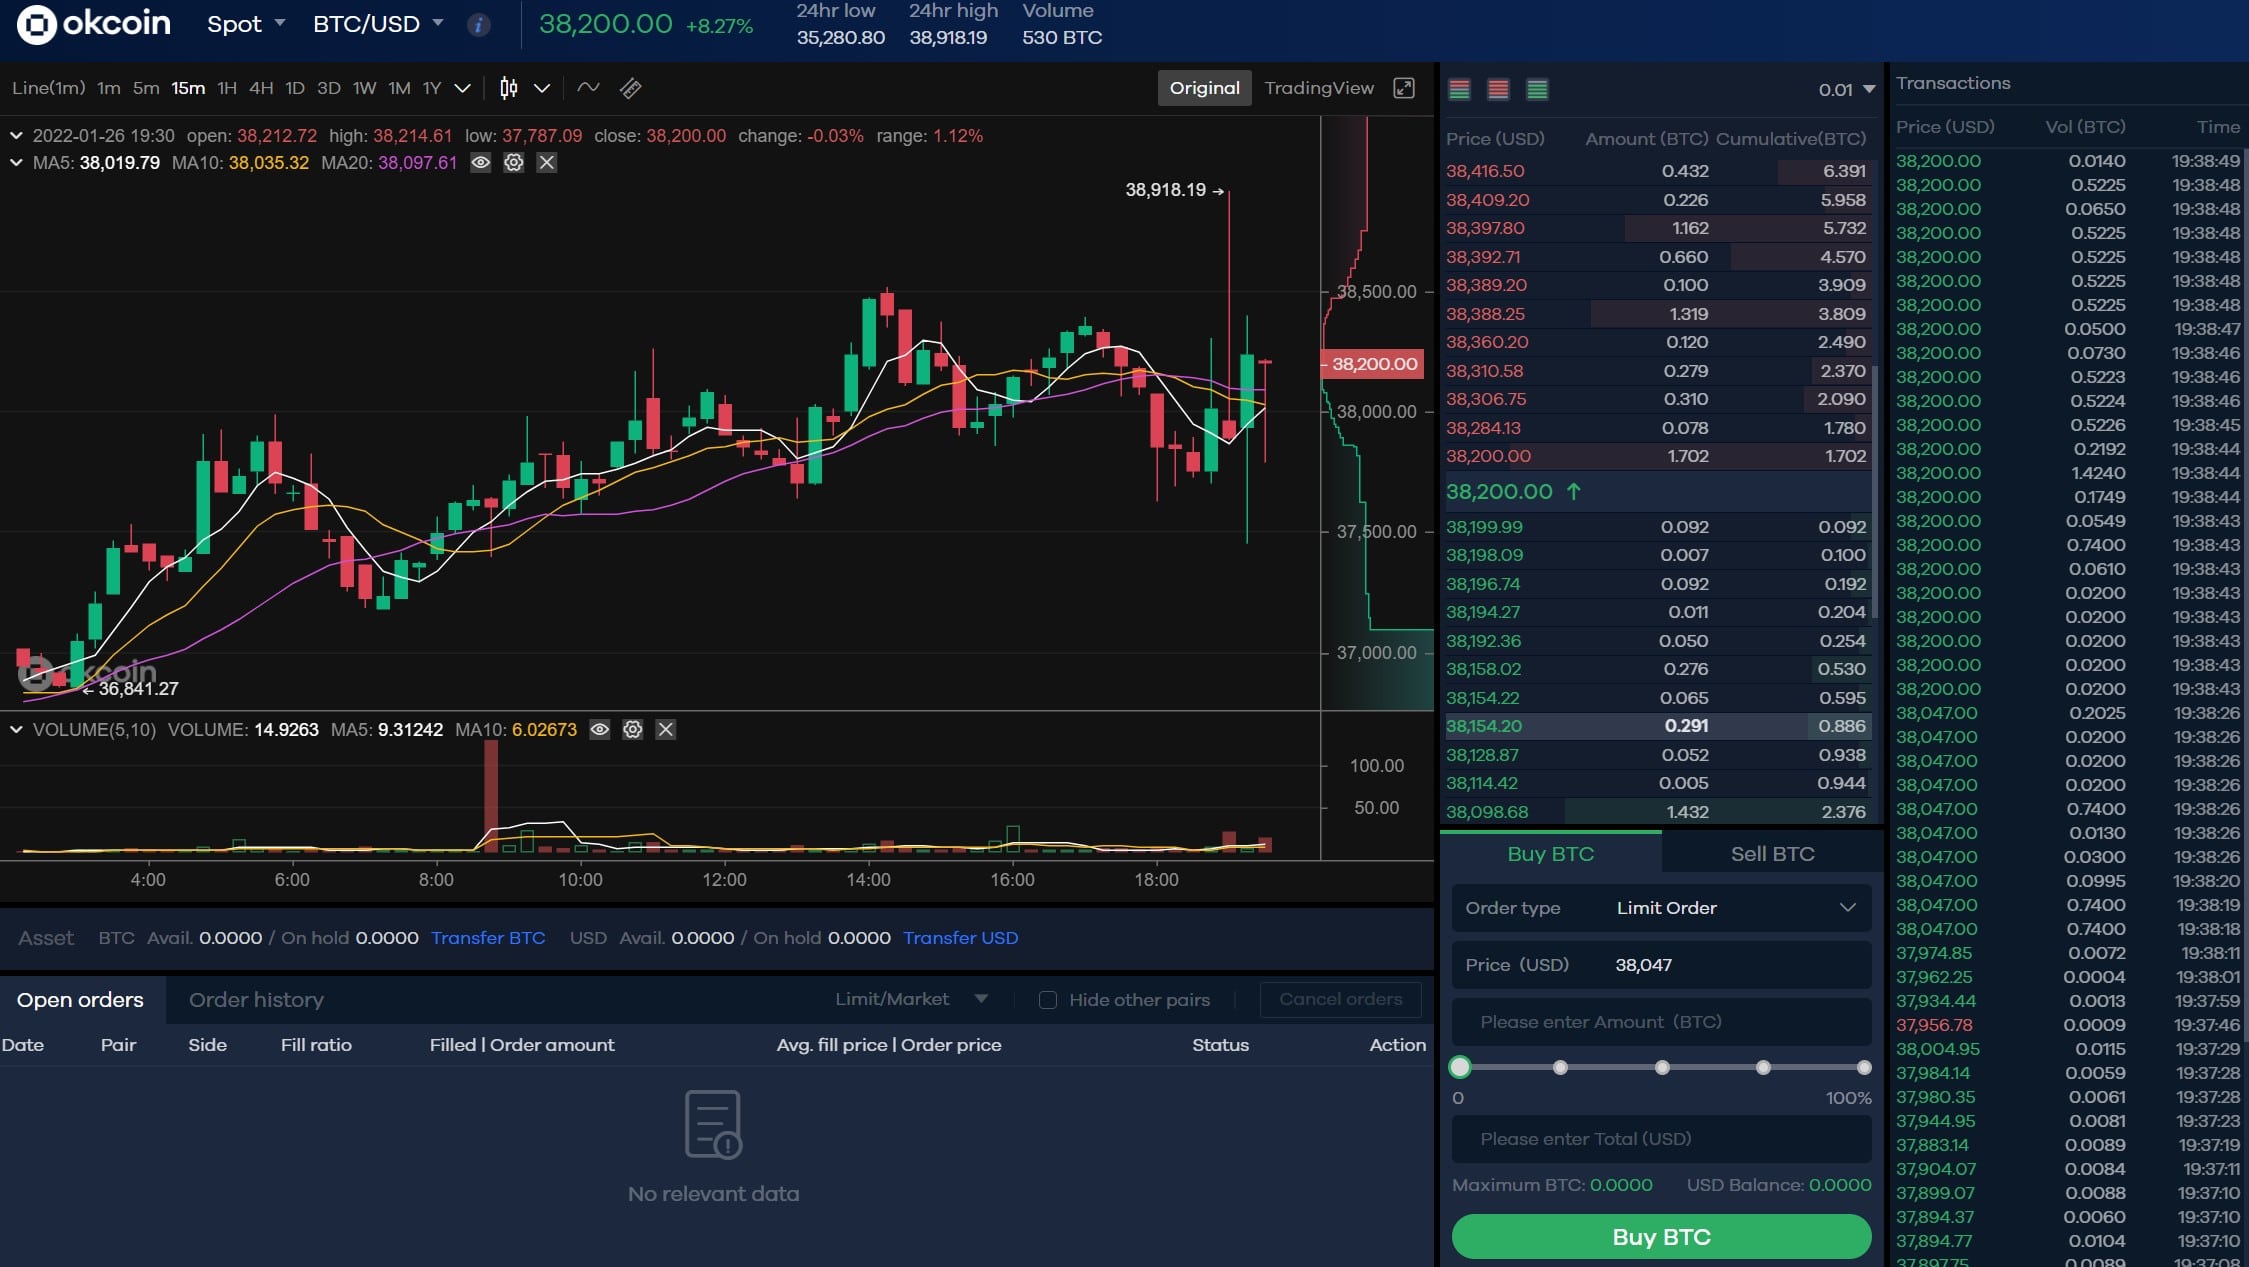 OKcoin trading screen